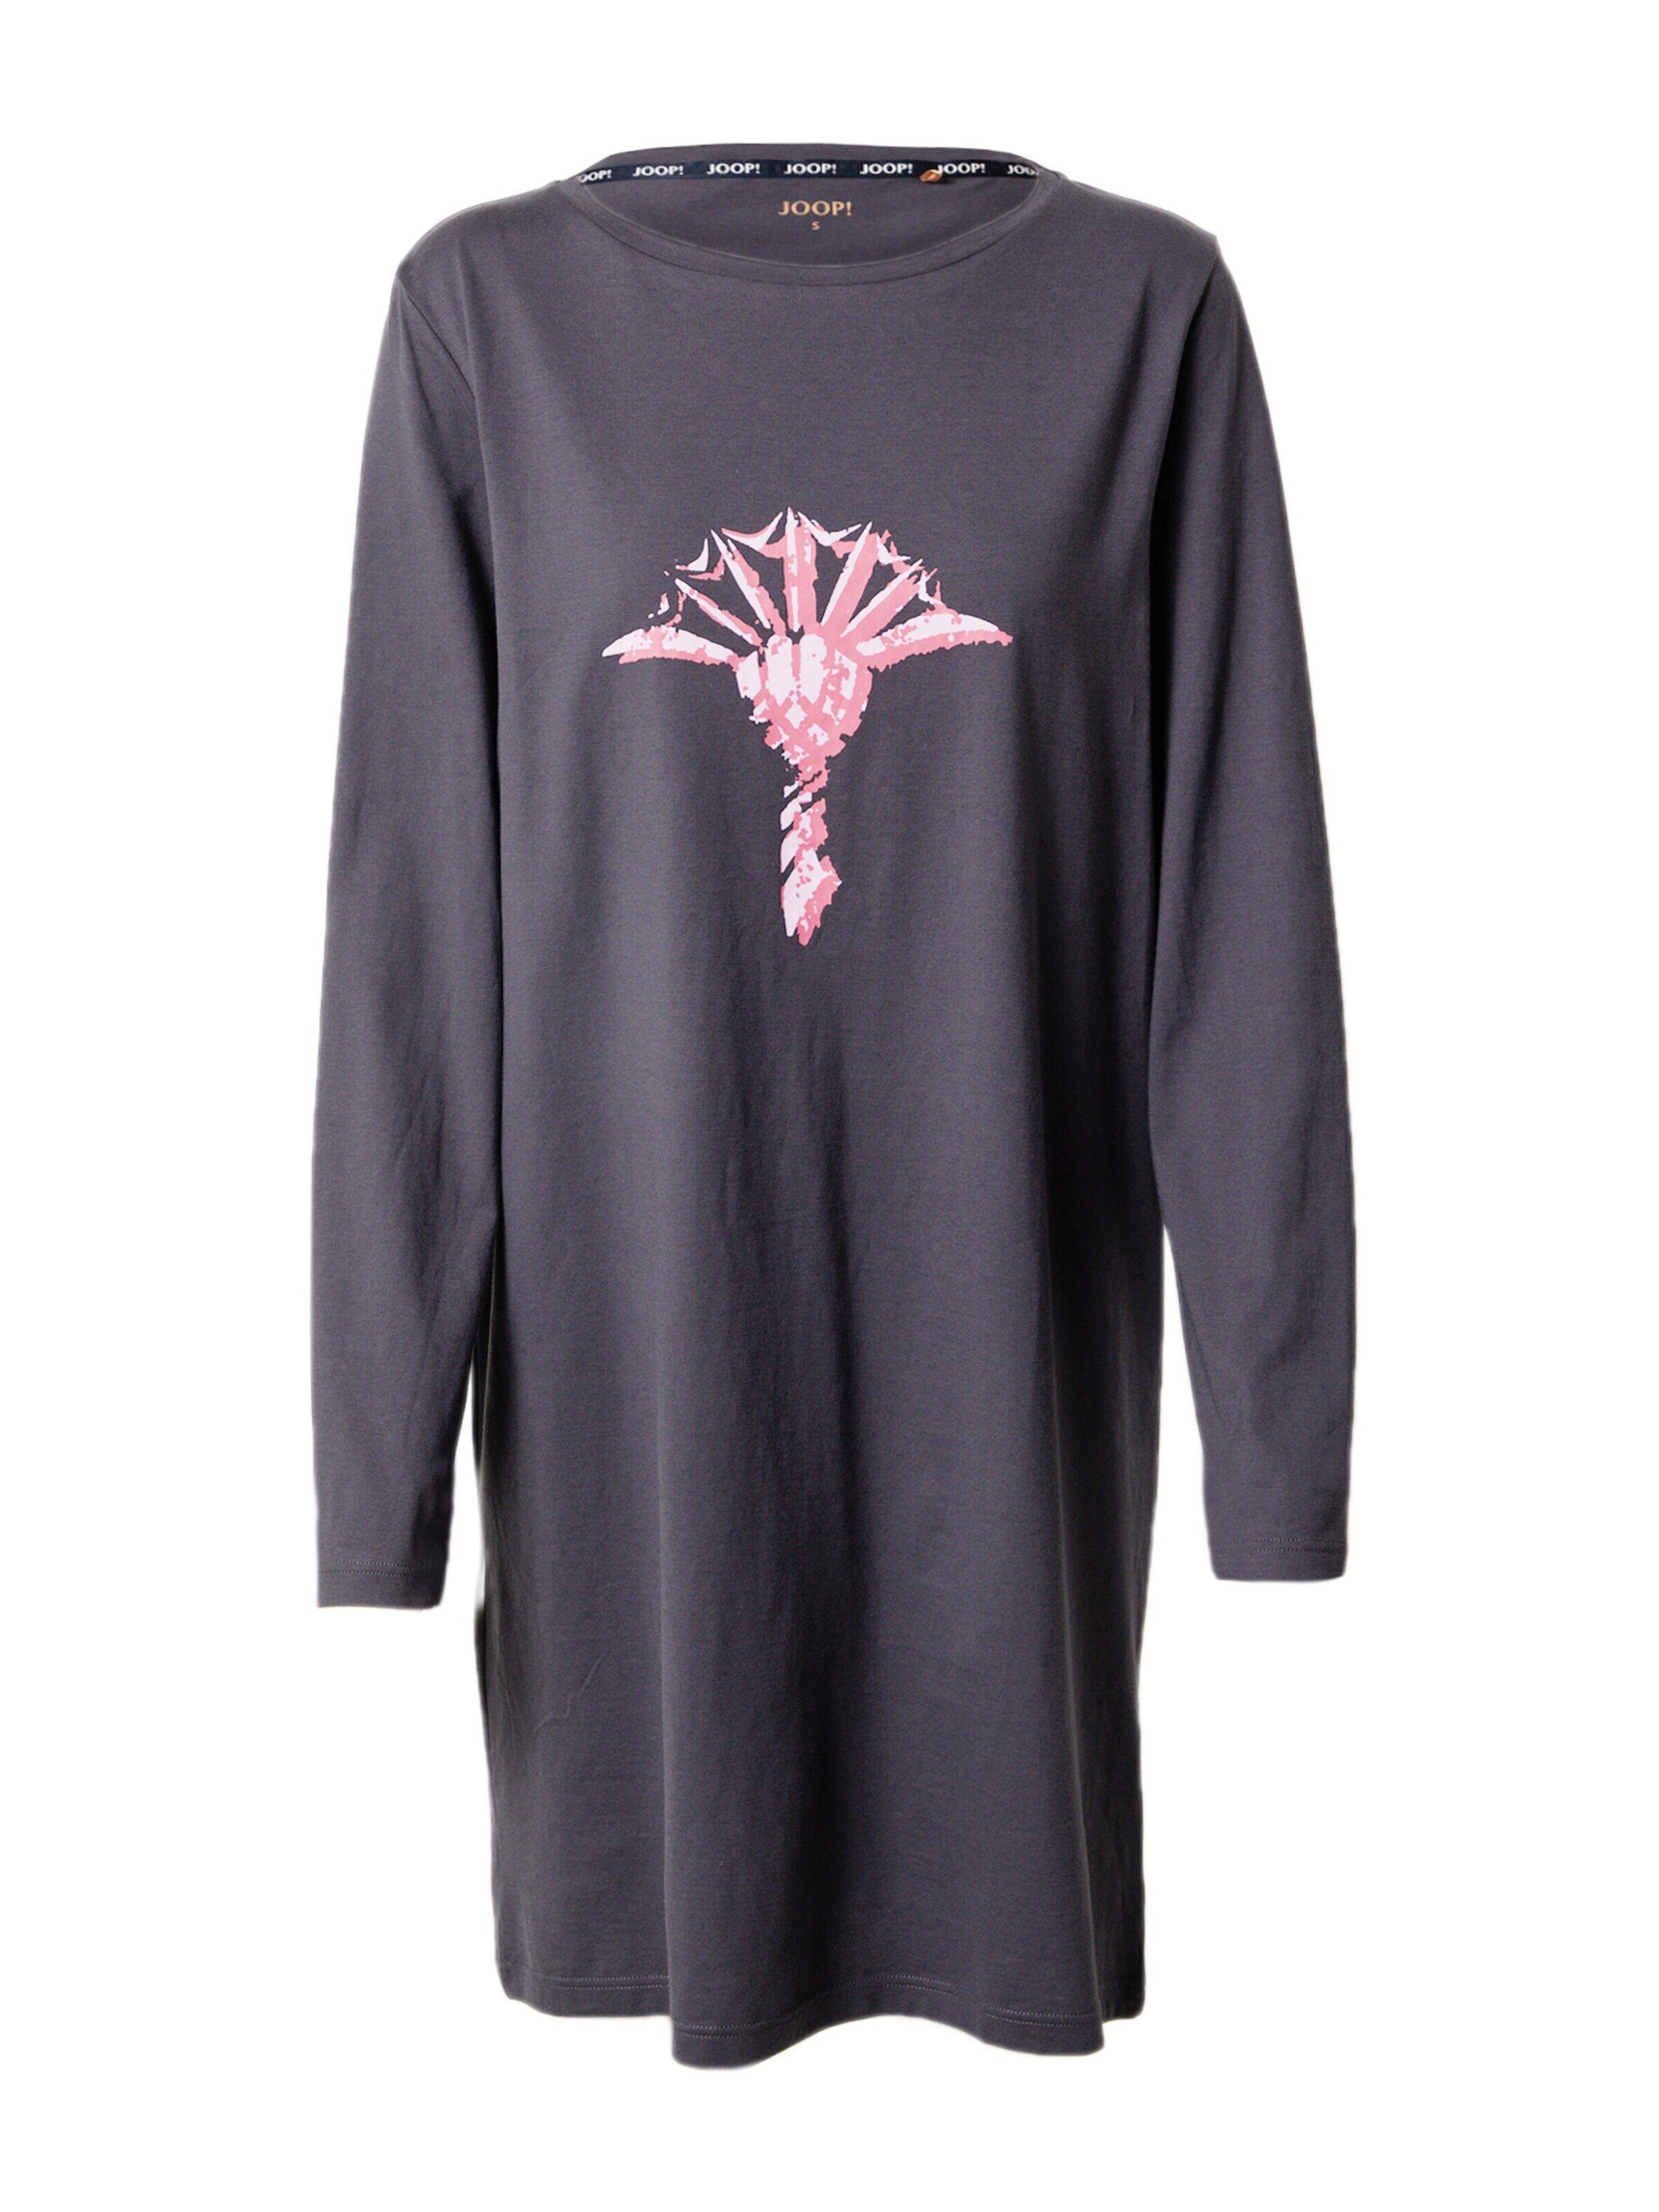 Joop! Kimono, Material: 100% Baumwolle, Plain/ohne Details Grau/Rosa